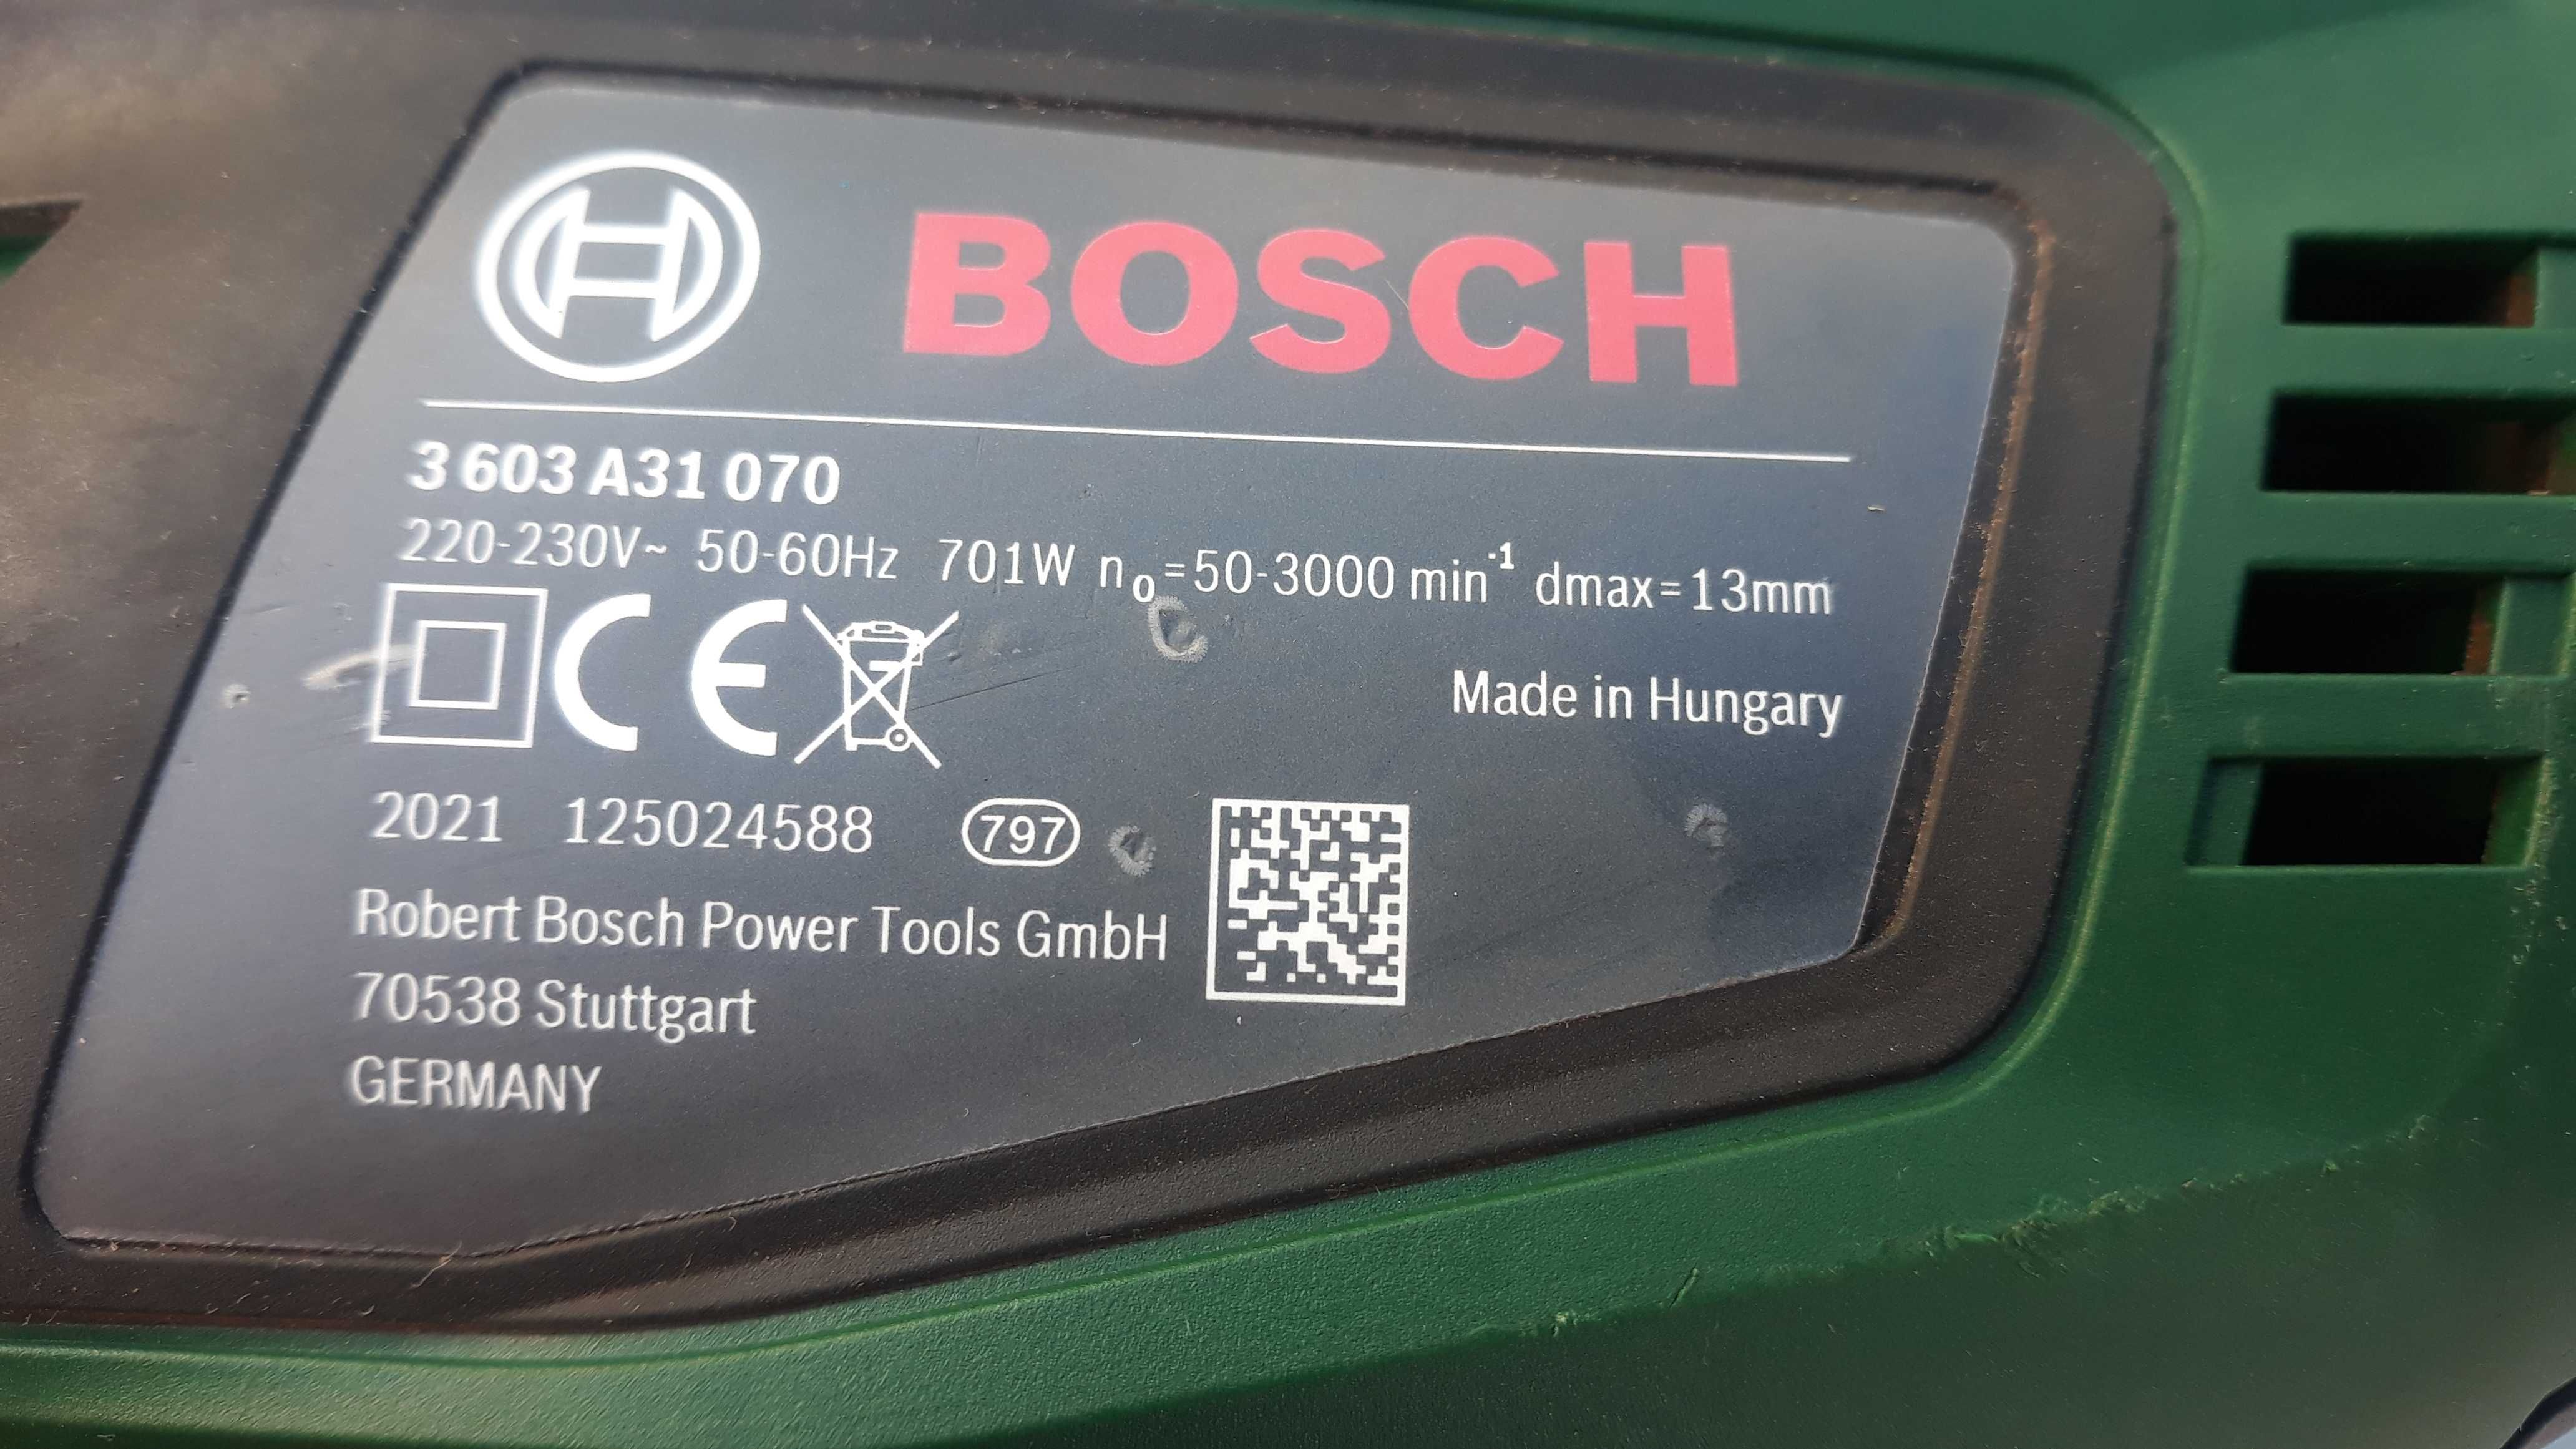 Wiertarka udarowa Bosch 701 Wat universal impact